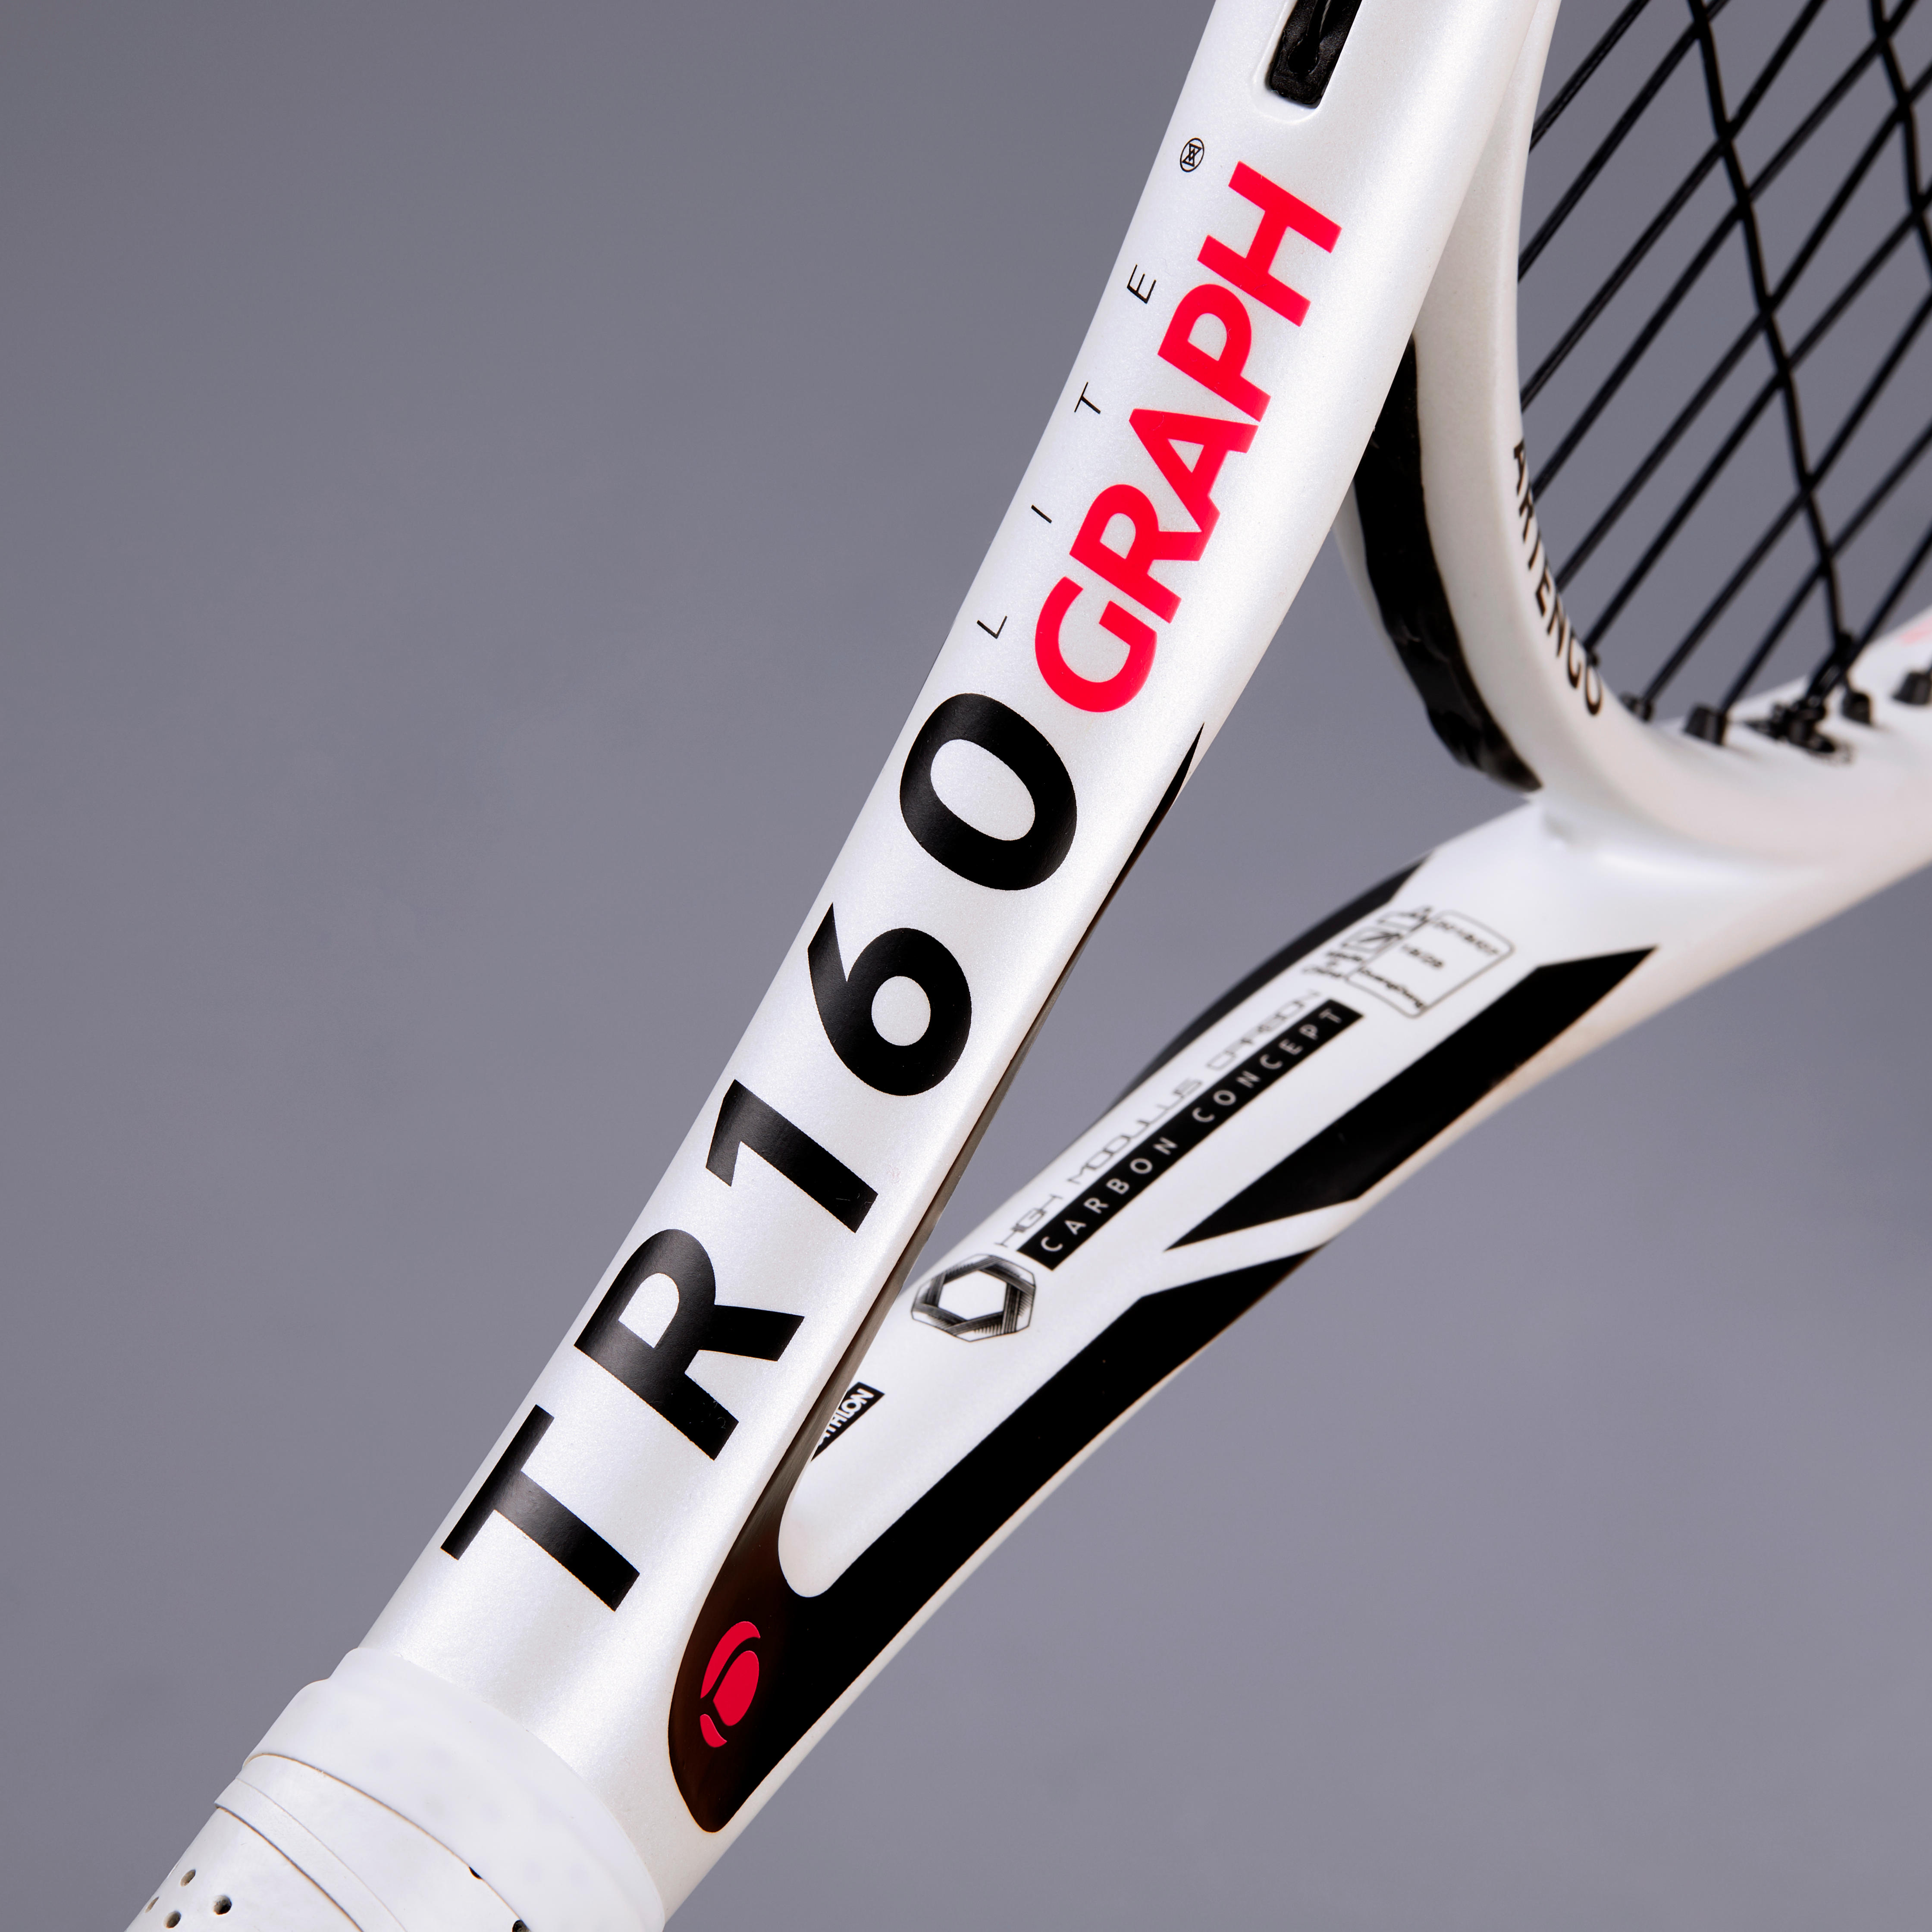 Raquette de tennis - TR 160 Graph blanc - ARTENGO